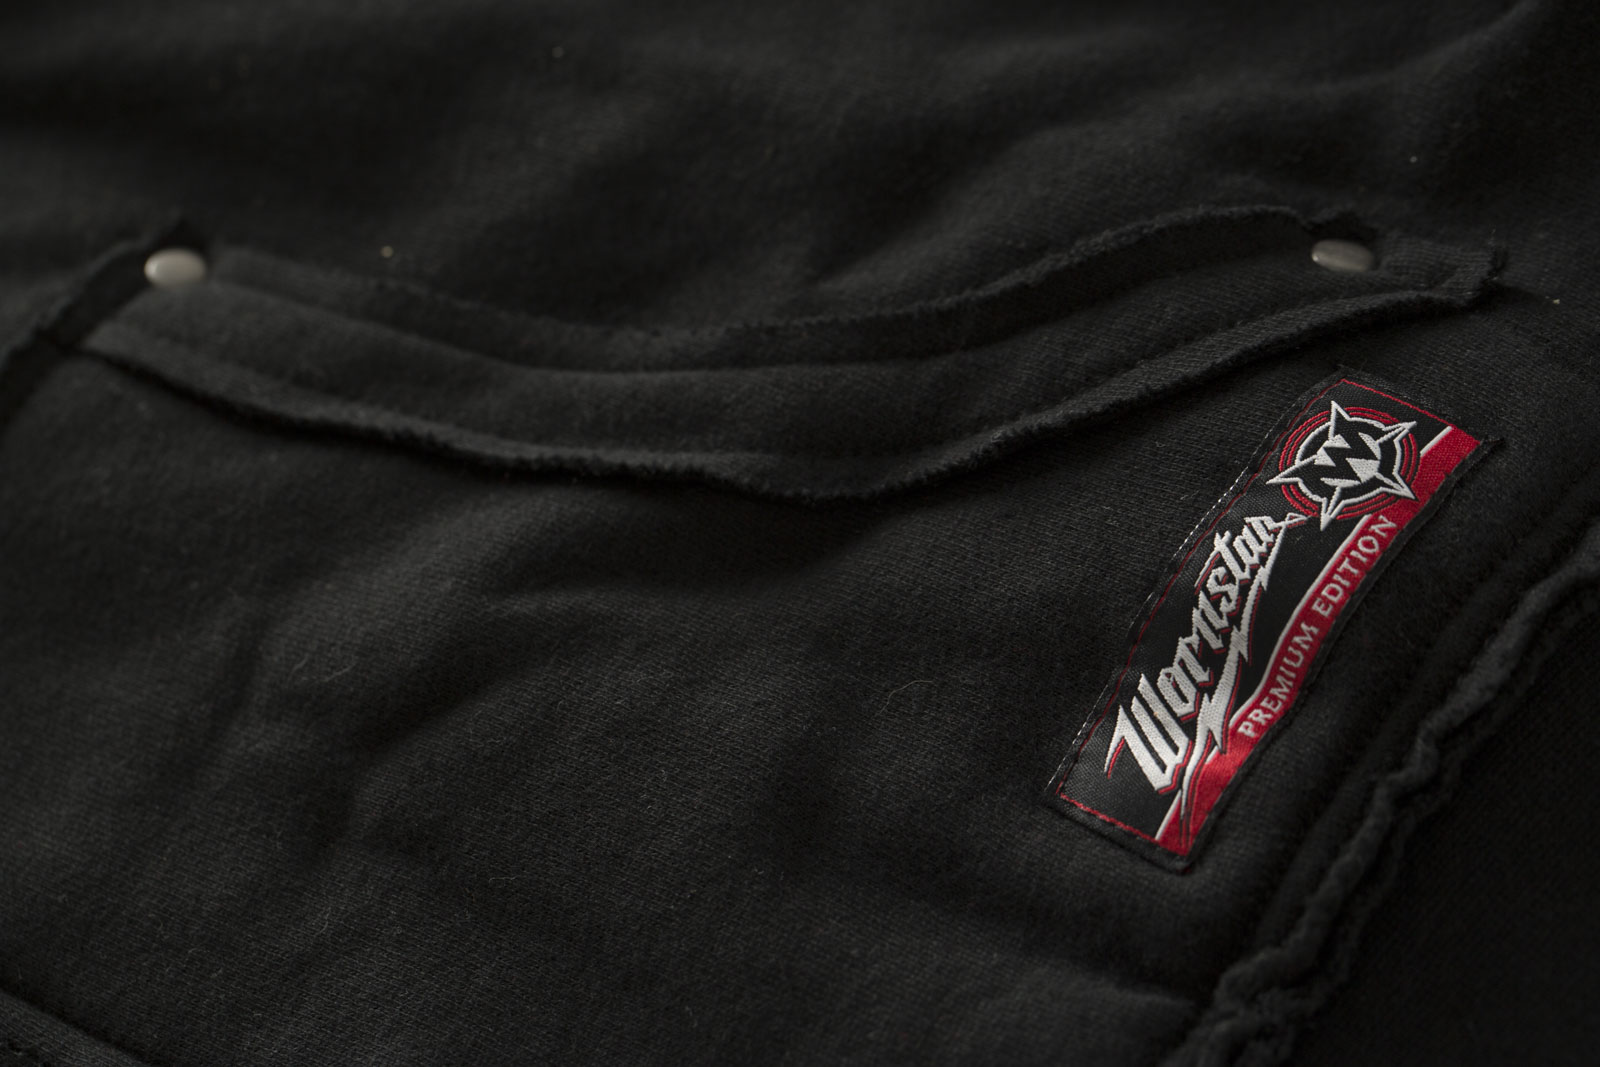 Wornstar Vengeance Premium Zip Hoody in black with large print designs